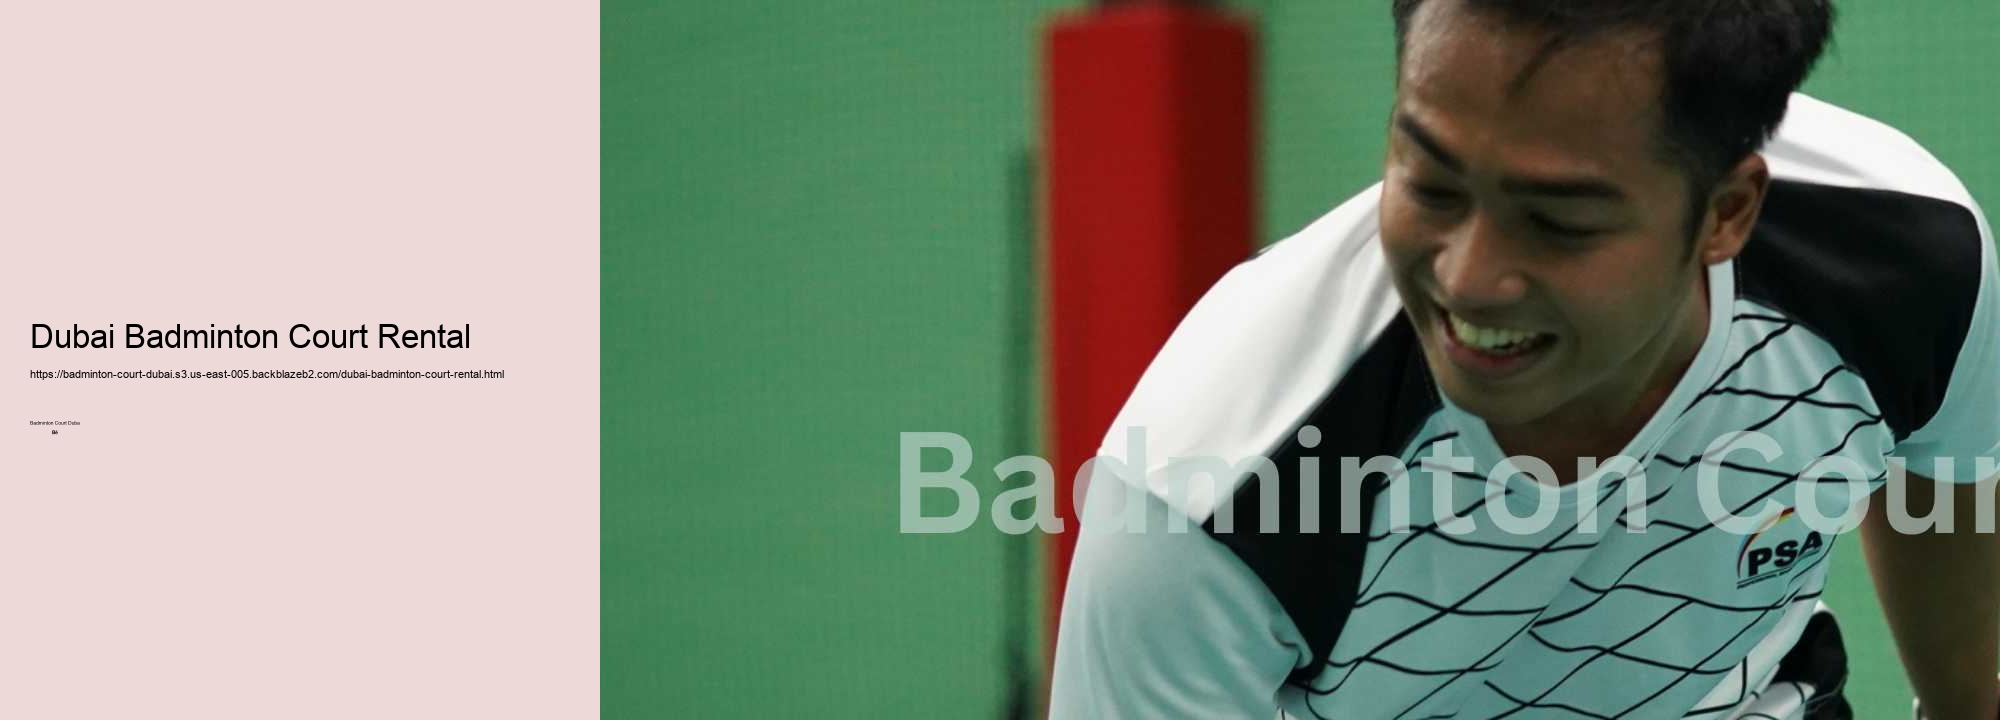 Dubai Badminton Court Rental